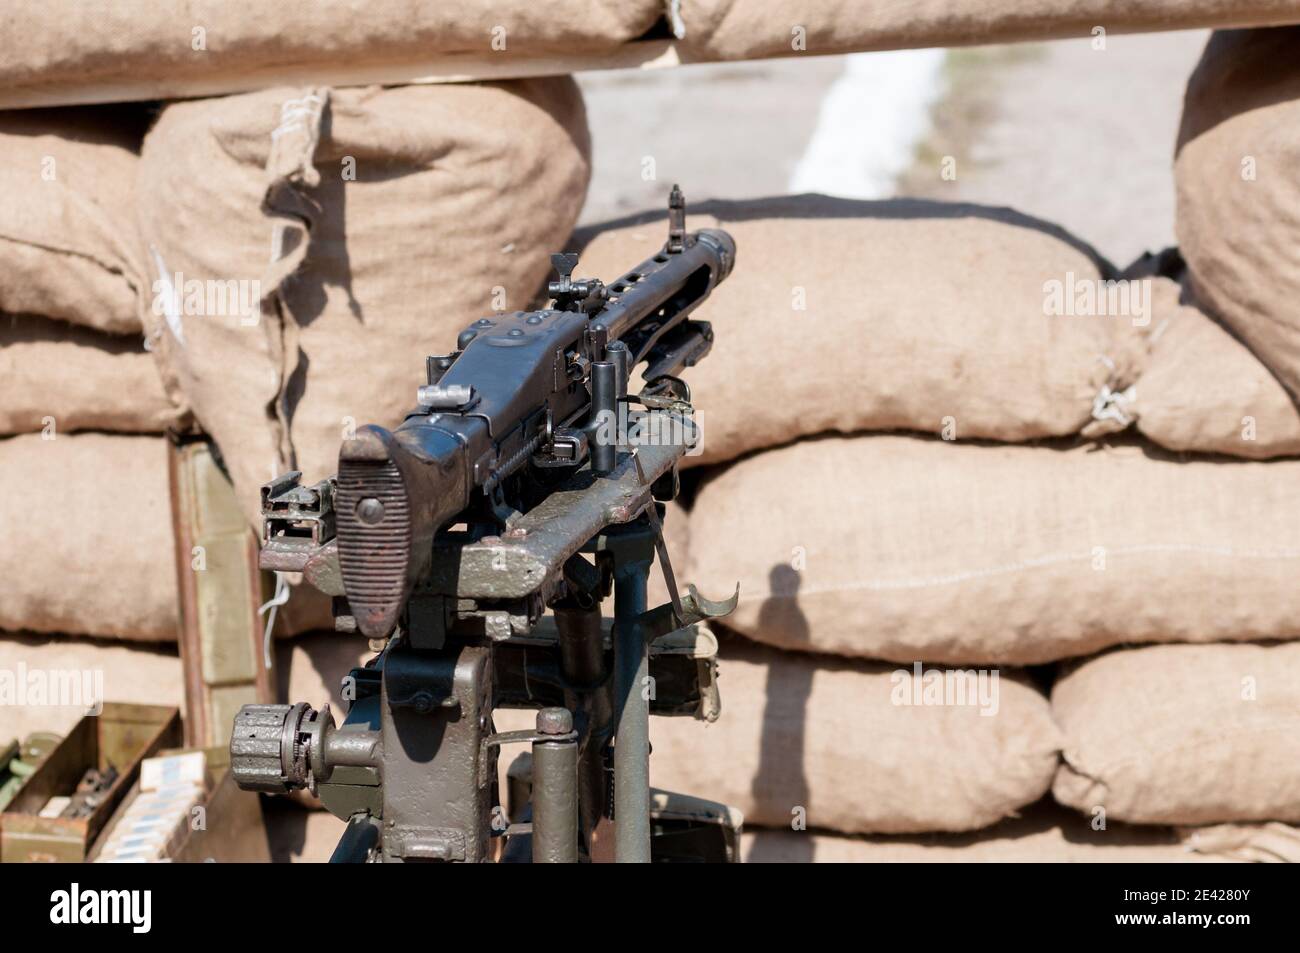 Military weapon machine gun ready to fire Stock Photo